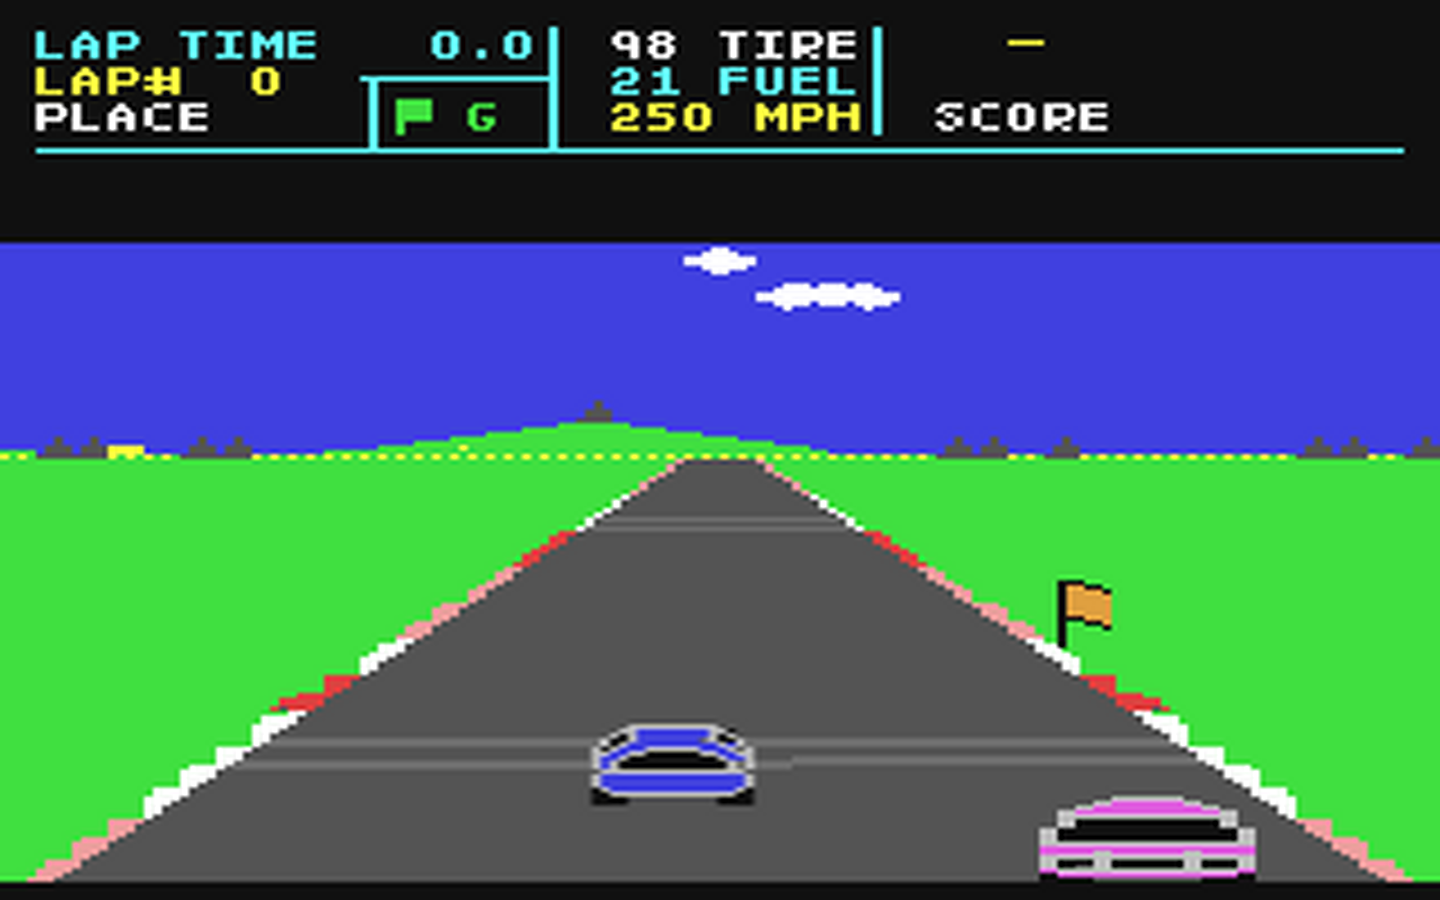 C64 GameBase Richard_Petty's_Talladega Cosmi 1985